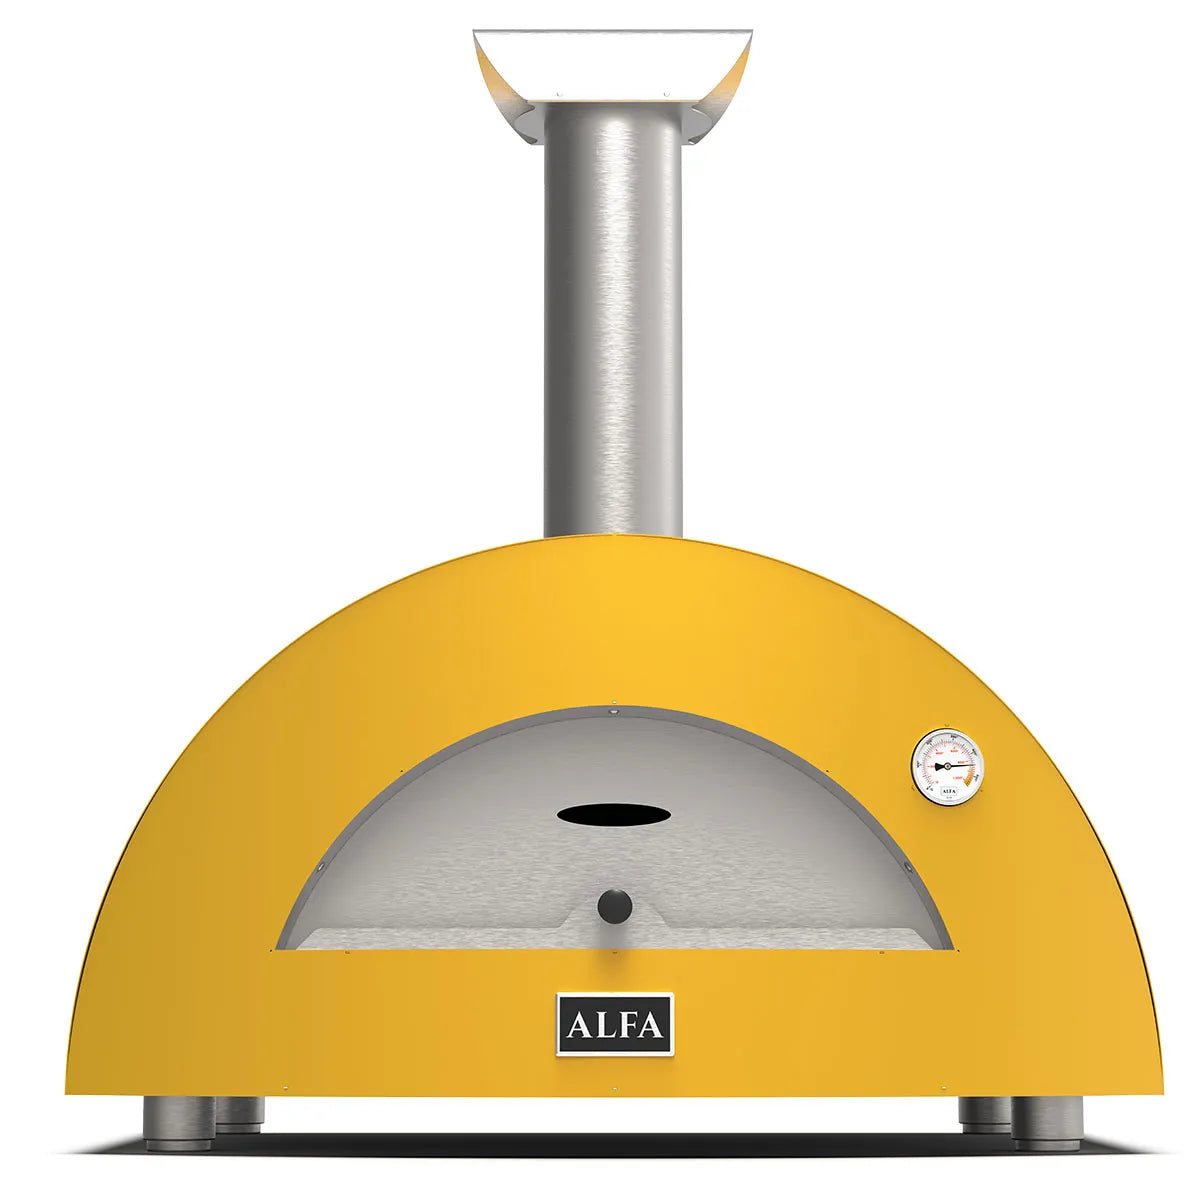 Alfa Moderno 3 Pizze Oven